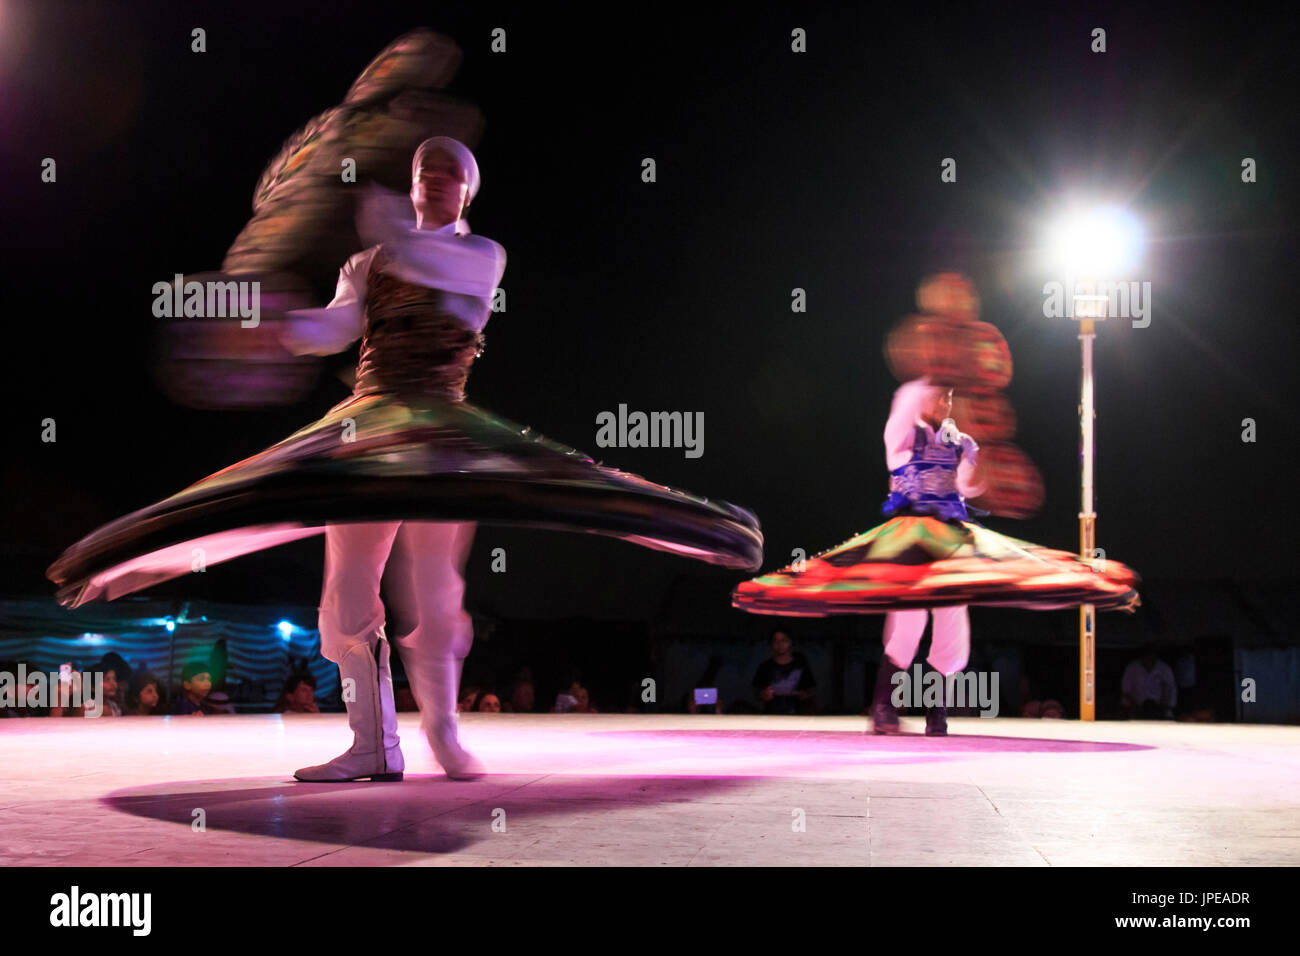 Dubai, United Arab Emirates. Arab dancer performing a 'turning dance' Stock Photo